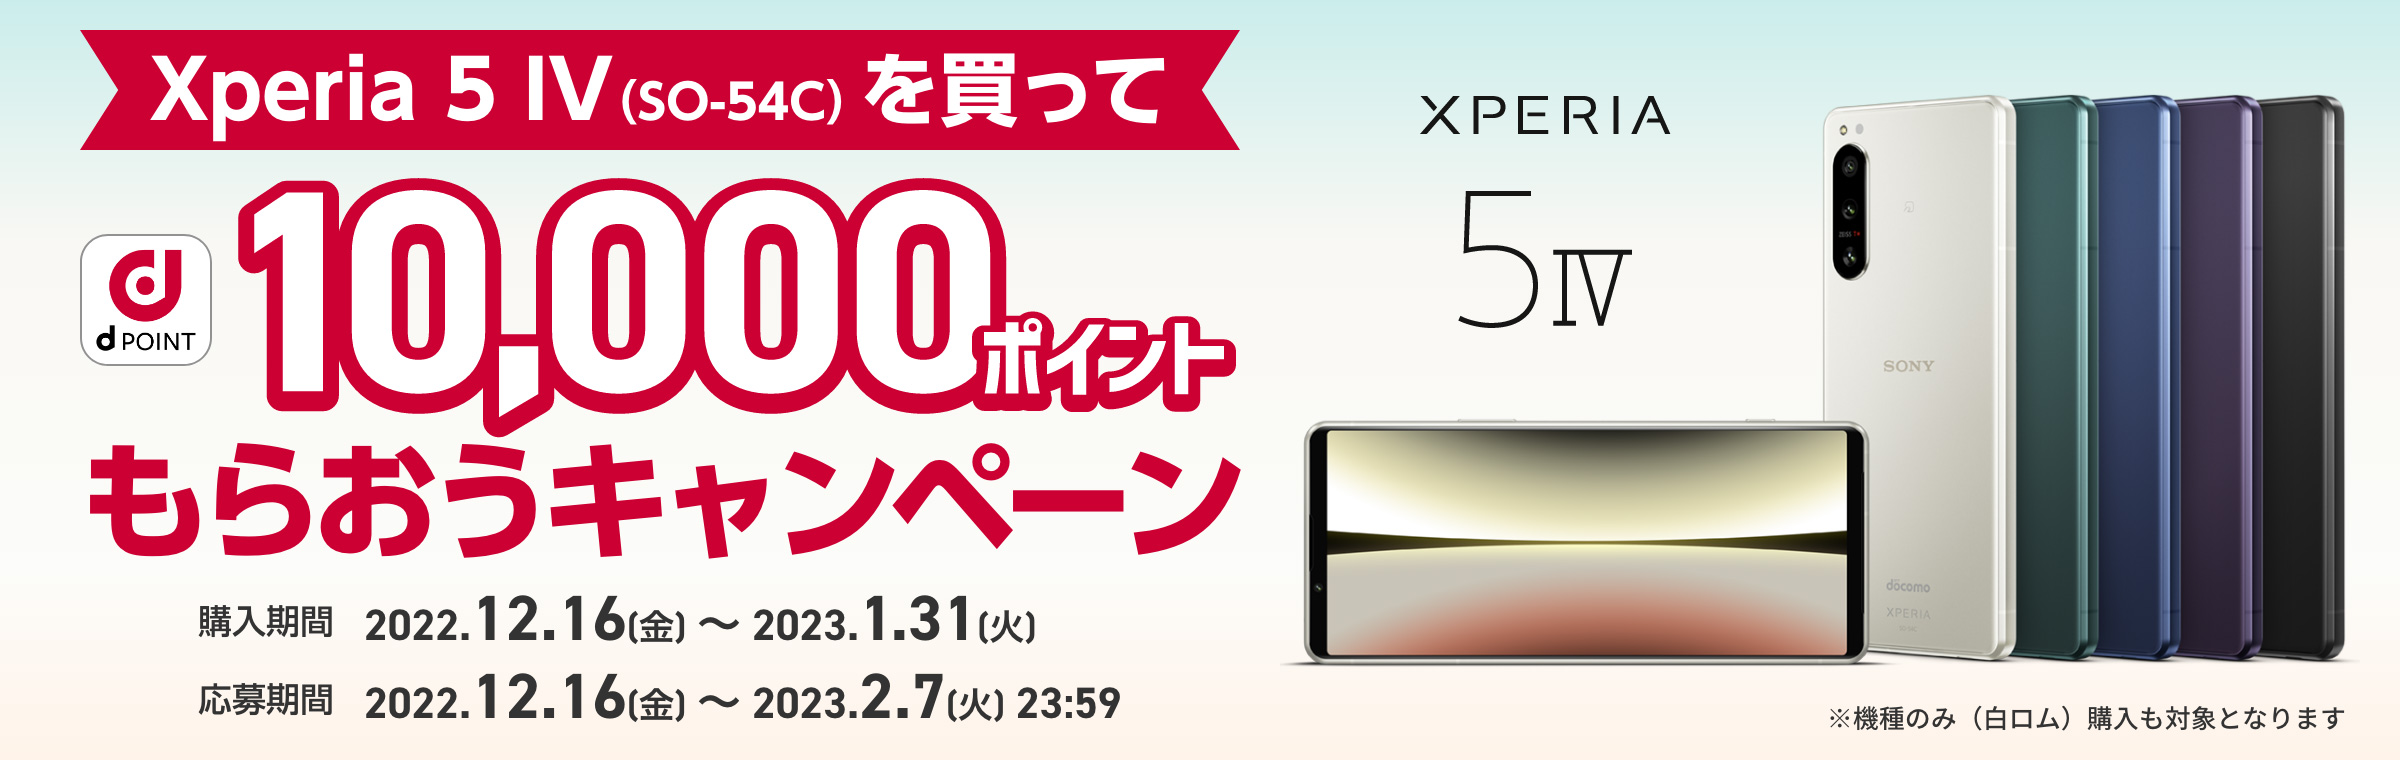 Xperia 5 Ⅳ（SO-54C）を買って10,000ポイントもらおうキャンペーン